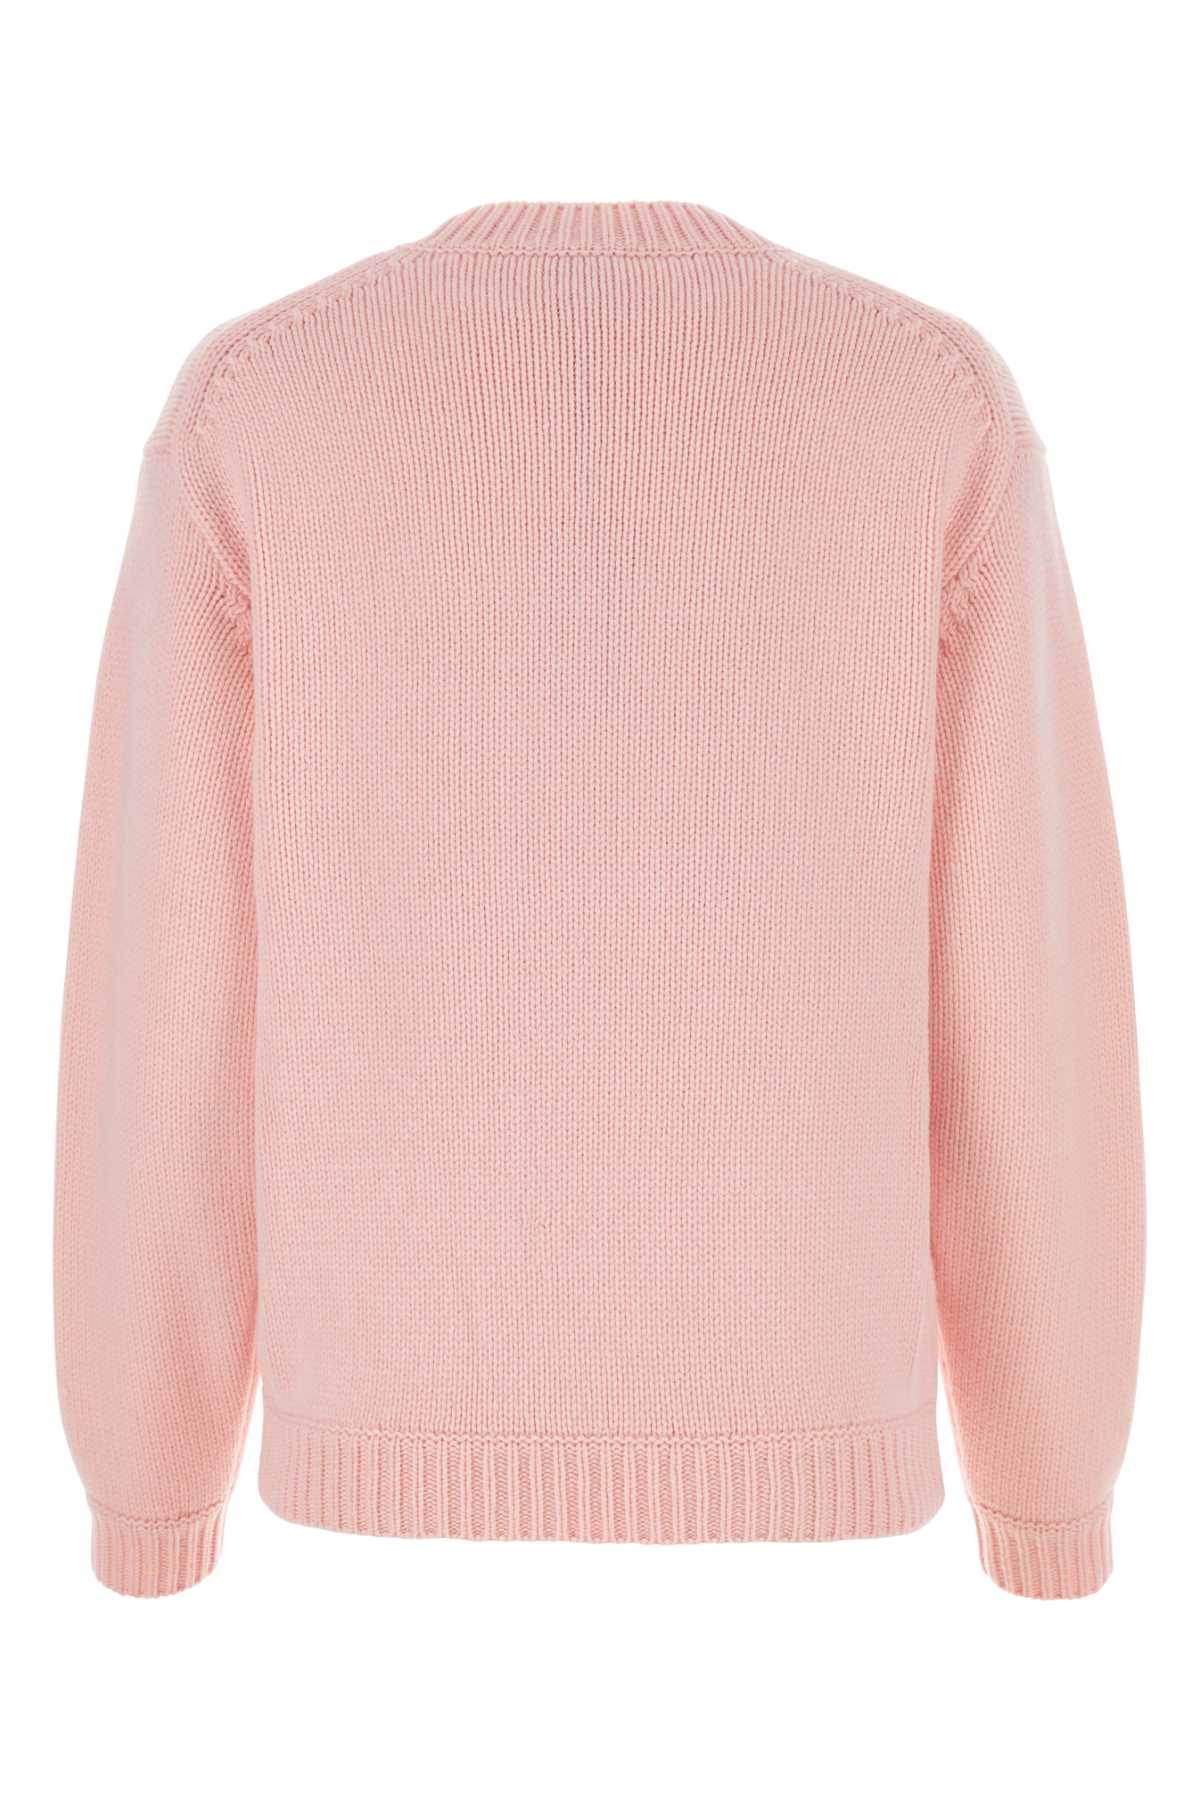 Kenzo Pink Stretch Wool Blend Sweater In Fadedpink